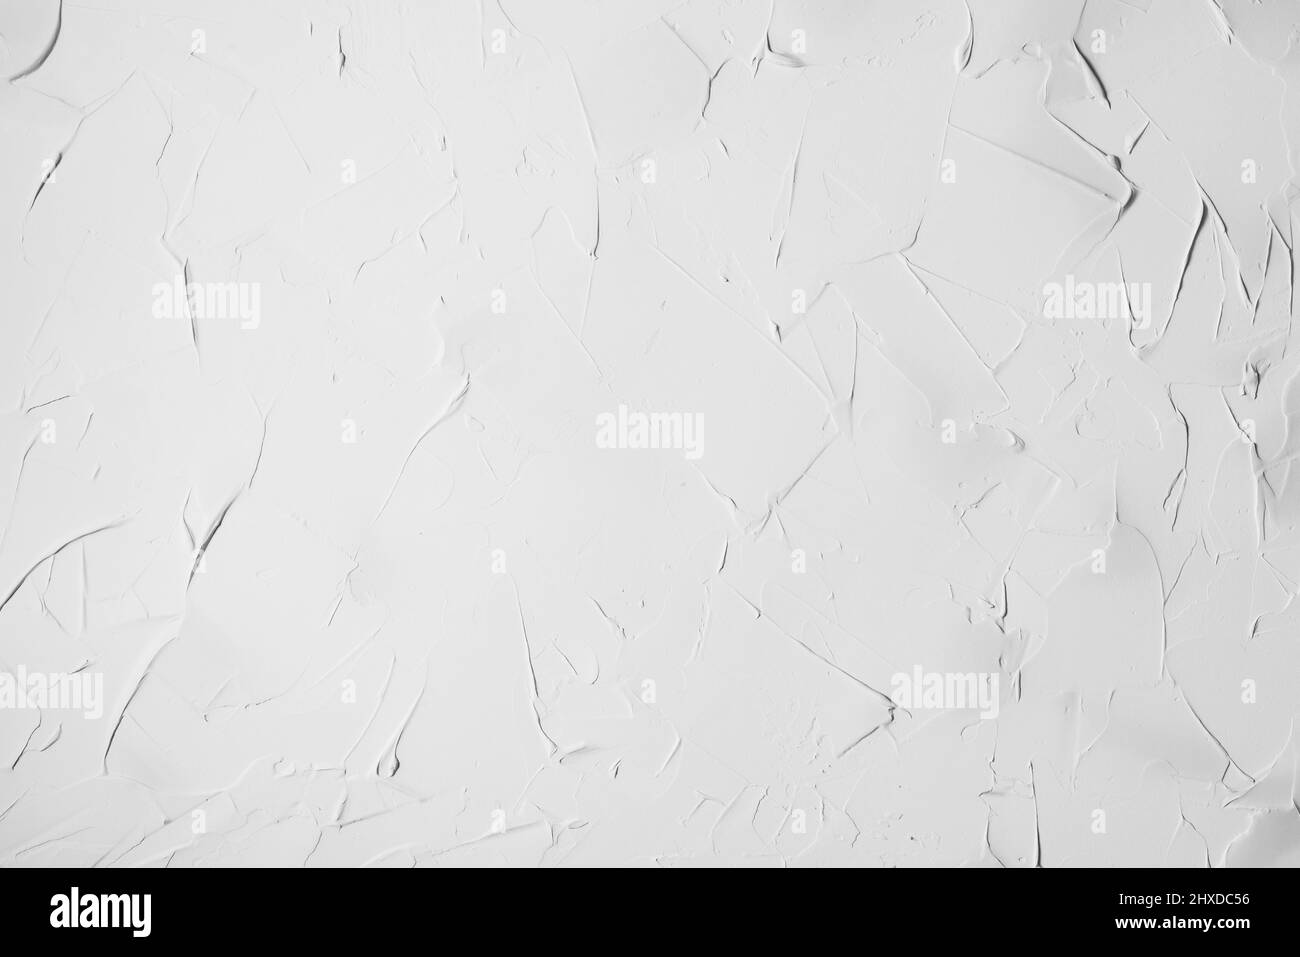 Decorating spatula Black and White Stock Photos & Images - Alamy